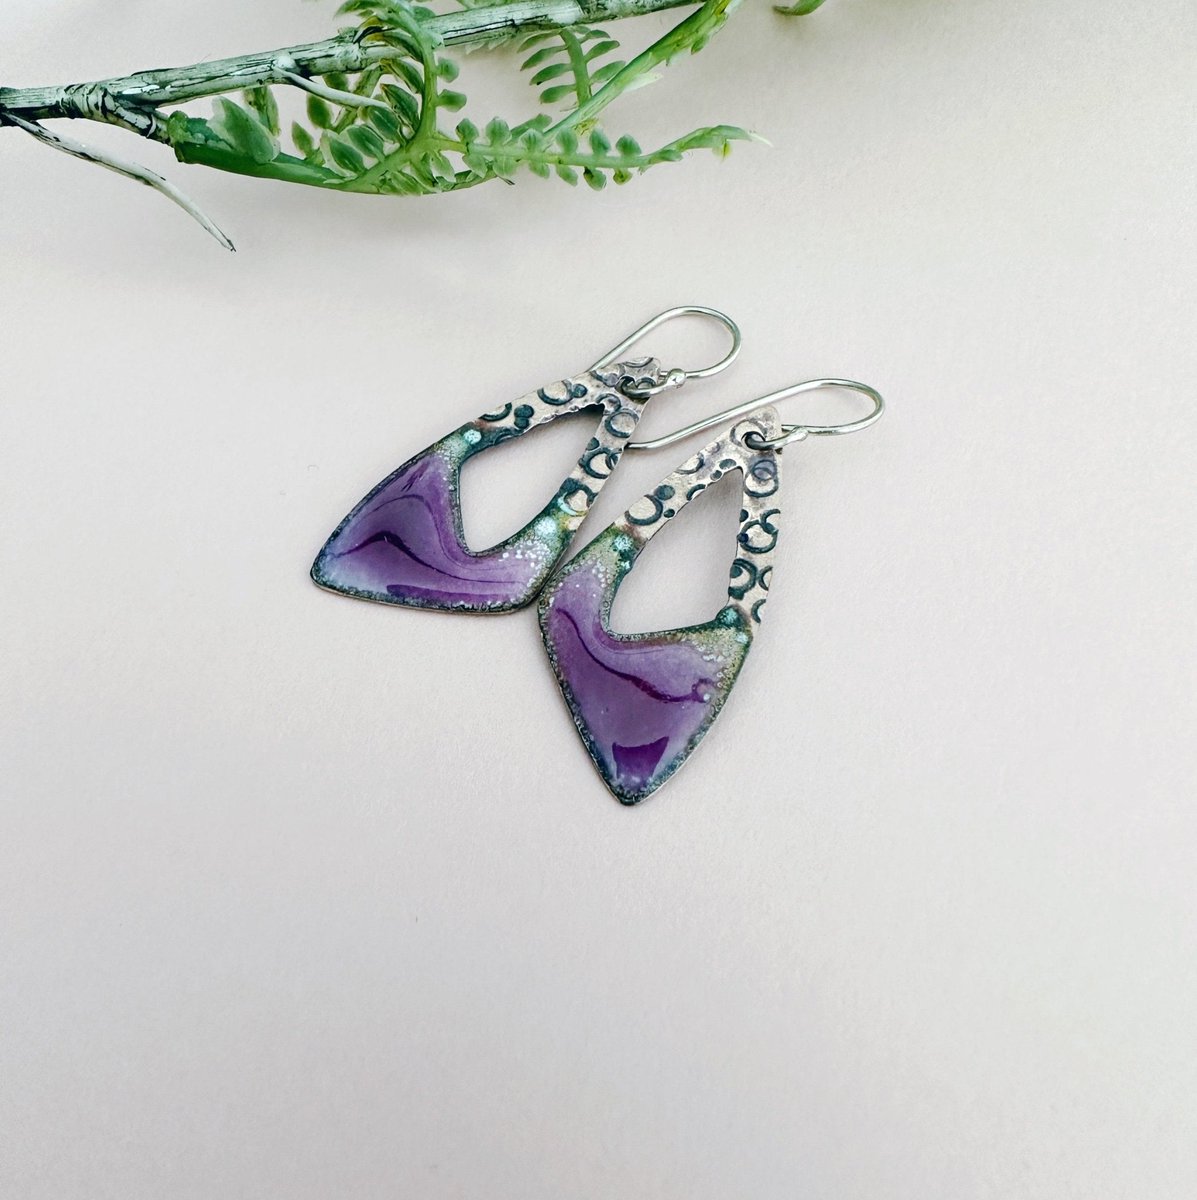 Irregular Triangle Earrings - Purple tuppu.net/76a5d53a #bizbubble #MHHSBD ##UKGiftHour #inbizhour #giftideas #HandmadeHour #shopsmall #UKHashtags #DangleEarrings